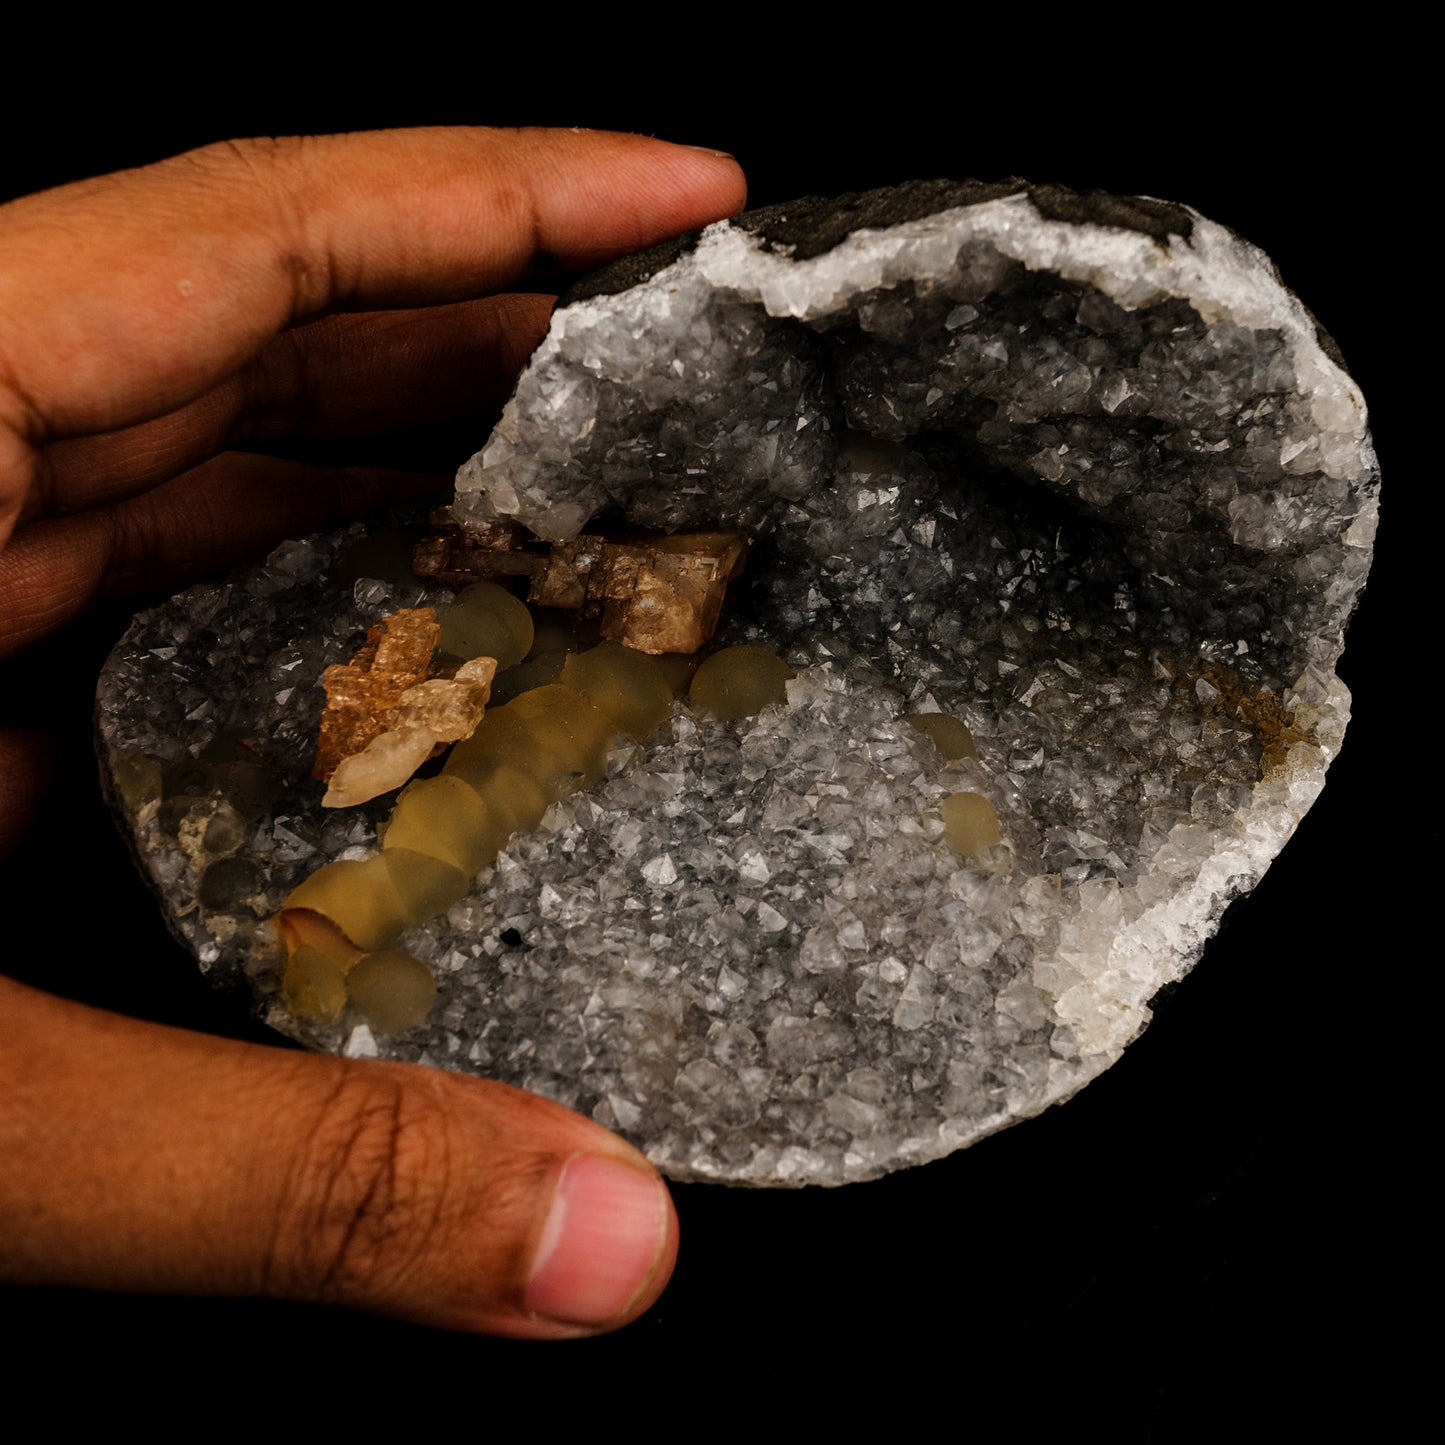 Fluorite balls With Sparkling Calcite on MM Quartz Natural Mineral Specimen # B 5916 Fluorite Superb Minerals 